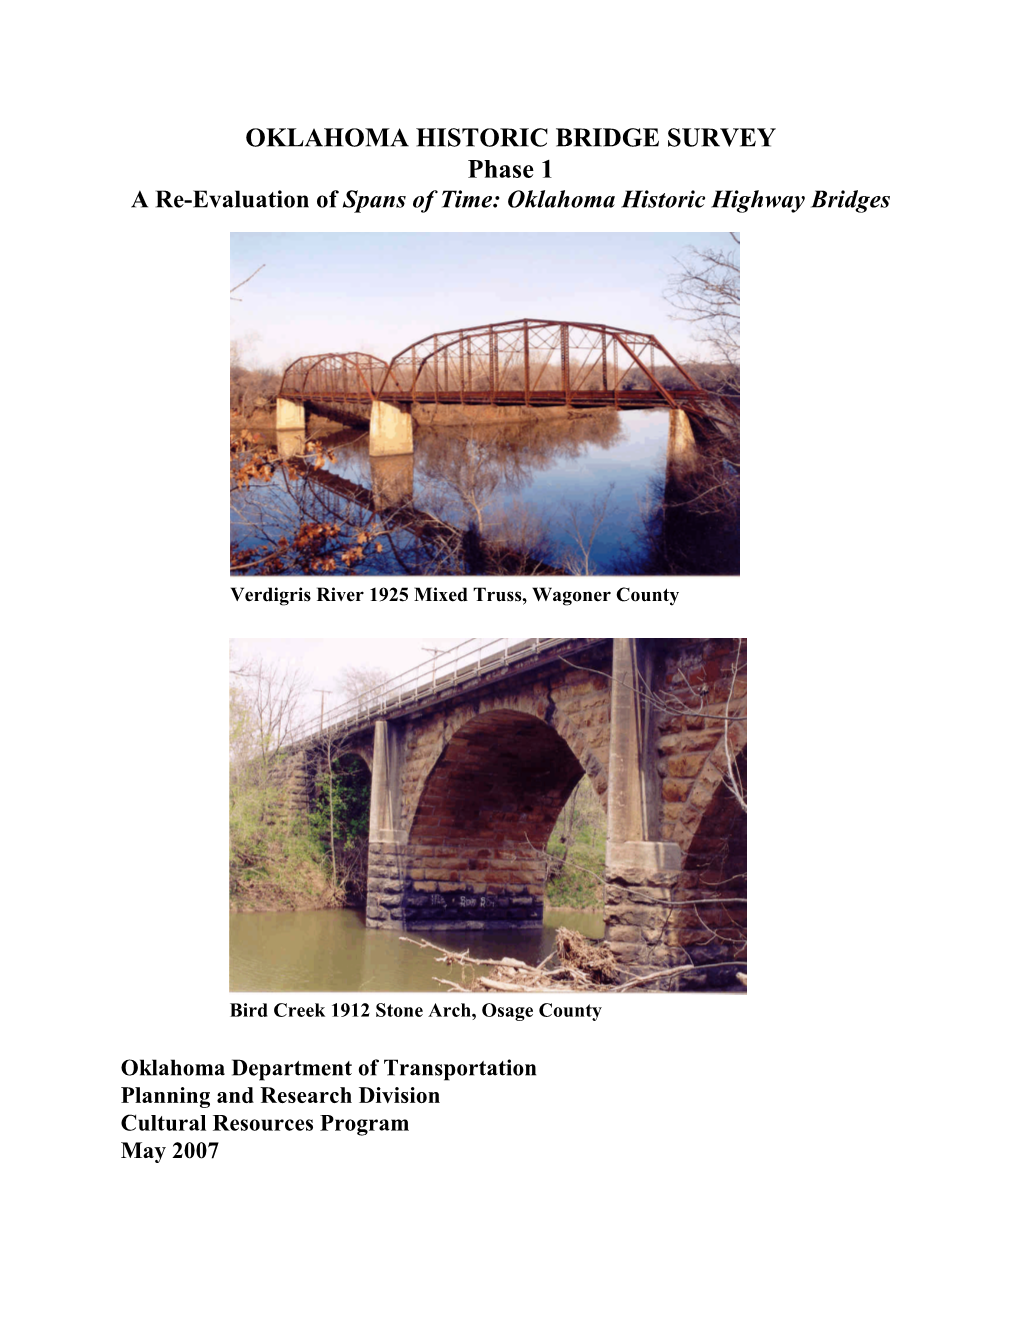 Oklahoma Historic Highway Bridge Survey Phase I